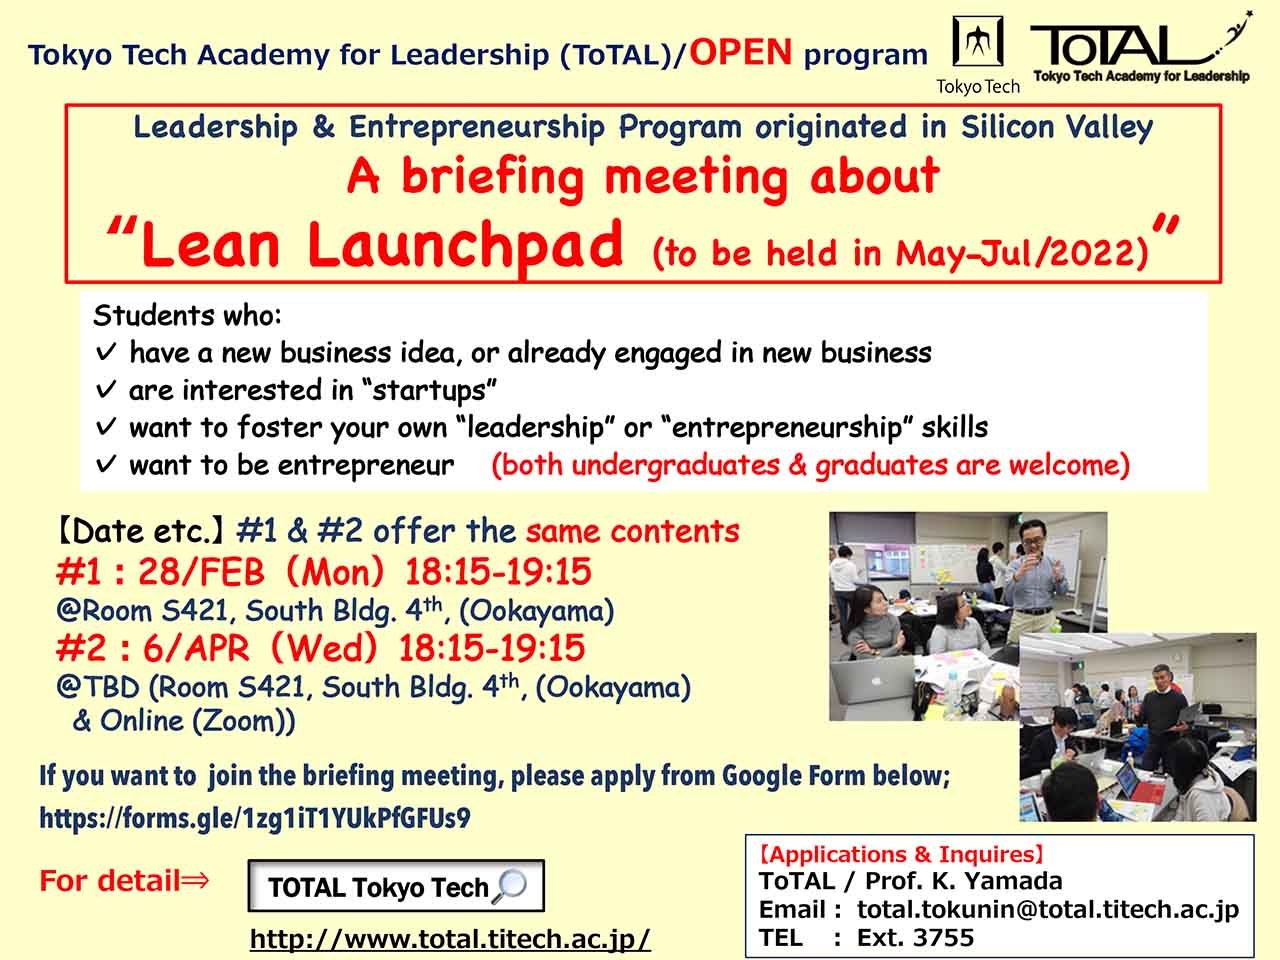 A briefing on leadership and entrepreneurship program "Lean Launchpad" workshops Flyer